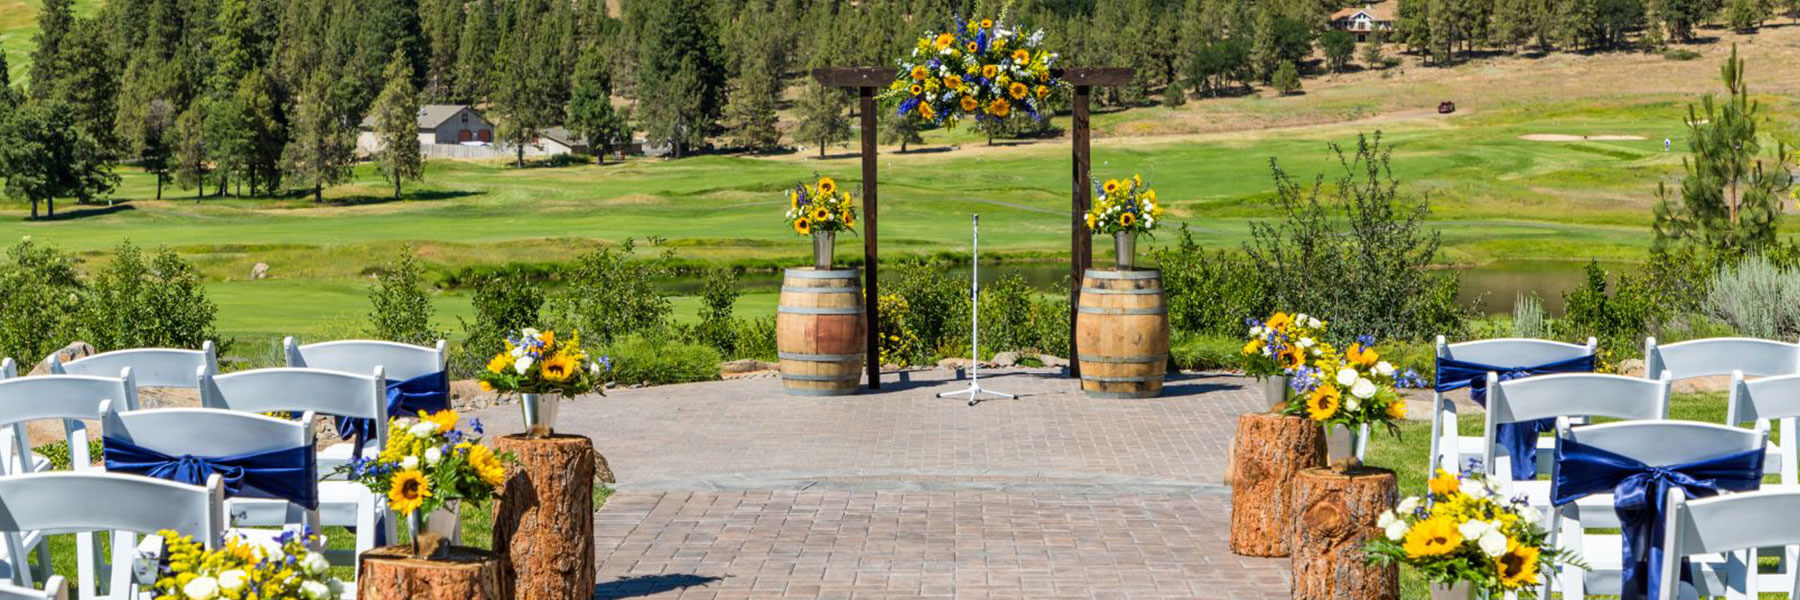 Wedding Services At Running Y Ranch, Klamath Falls